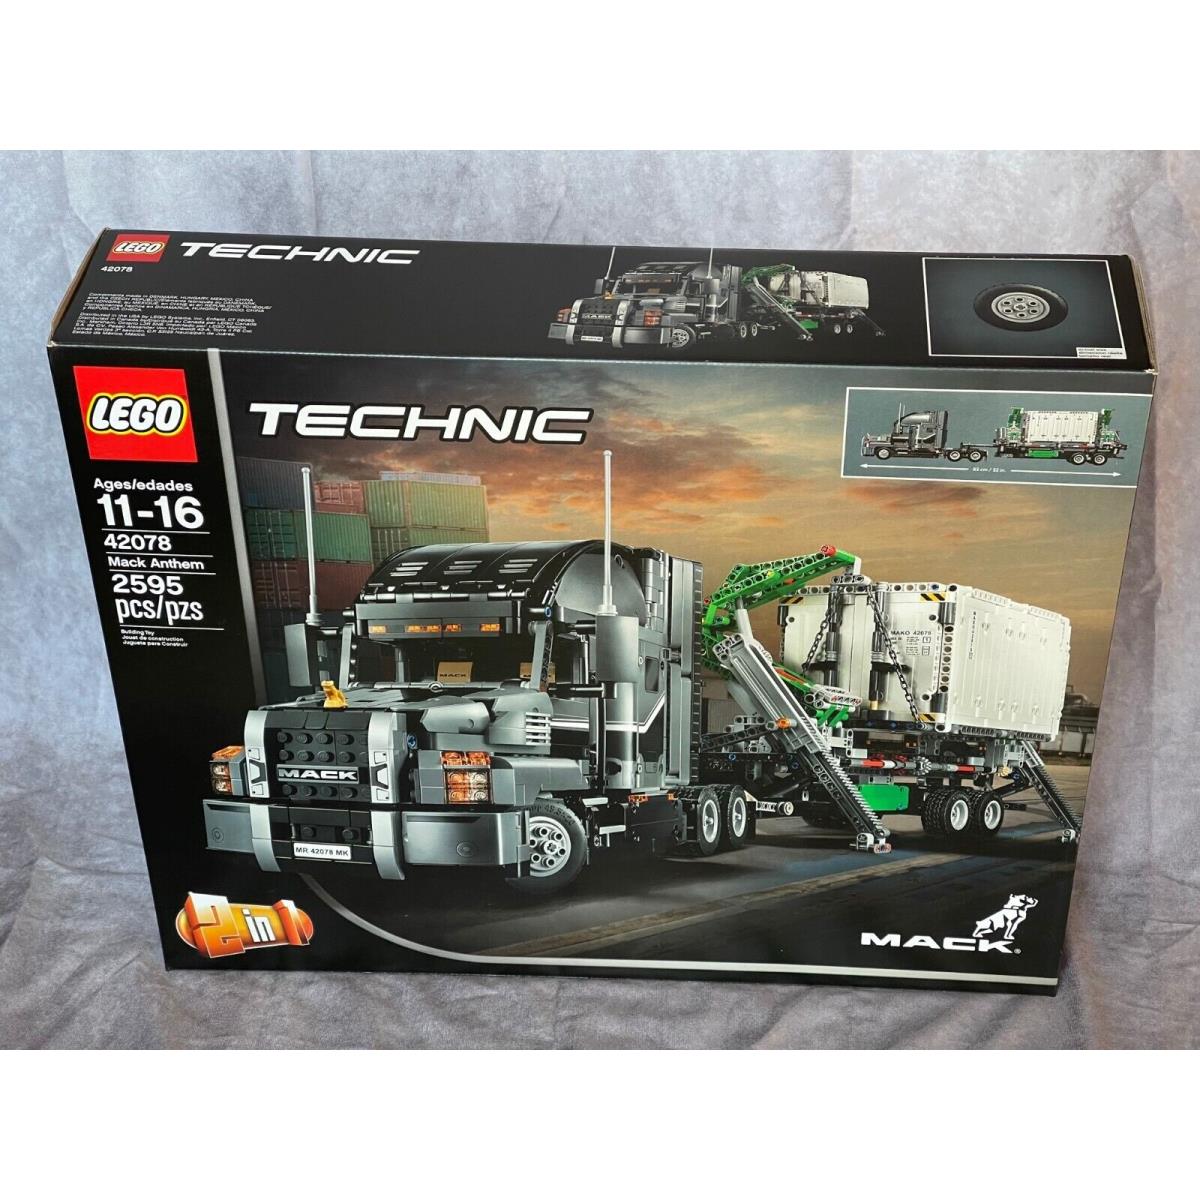 Lego Technic Mack Anthem 42078 Building Kit 2595 Pcs Truck Model Gift Set